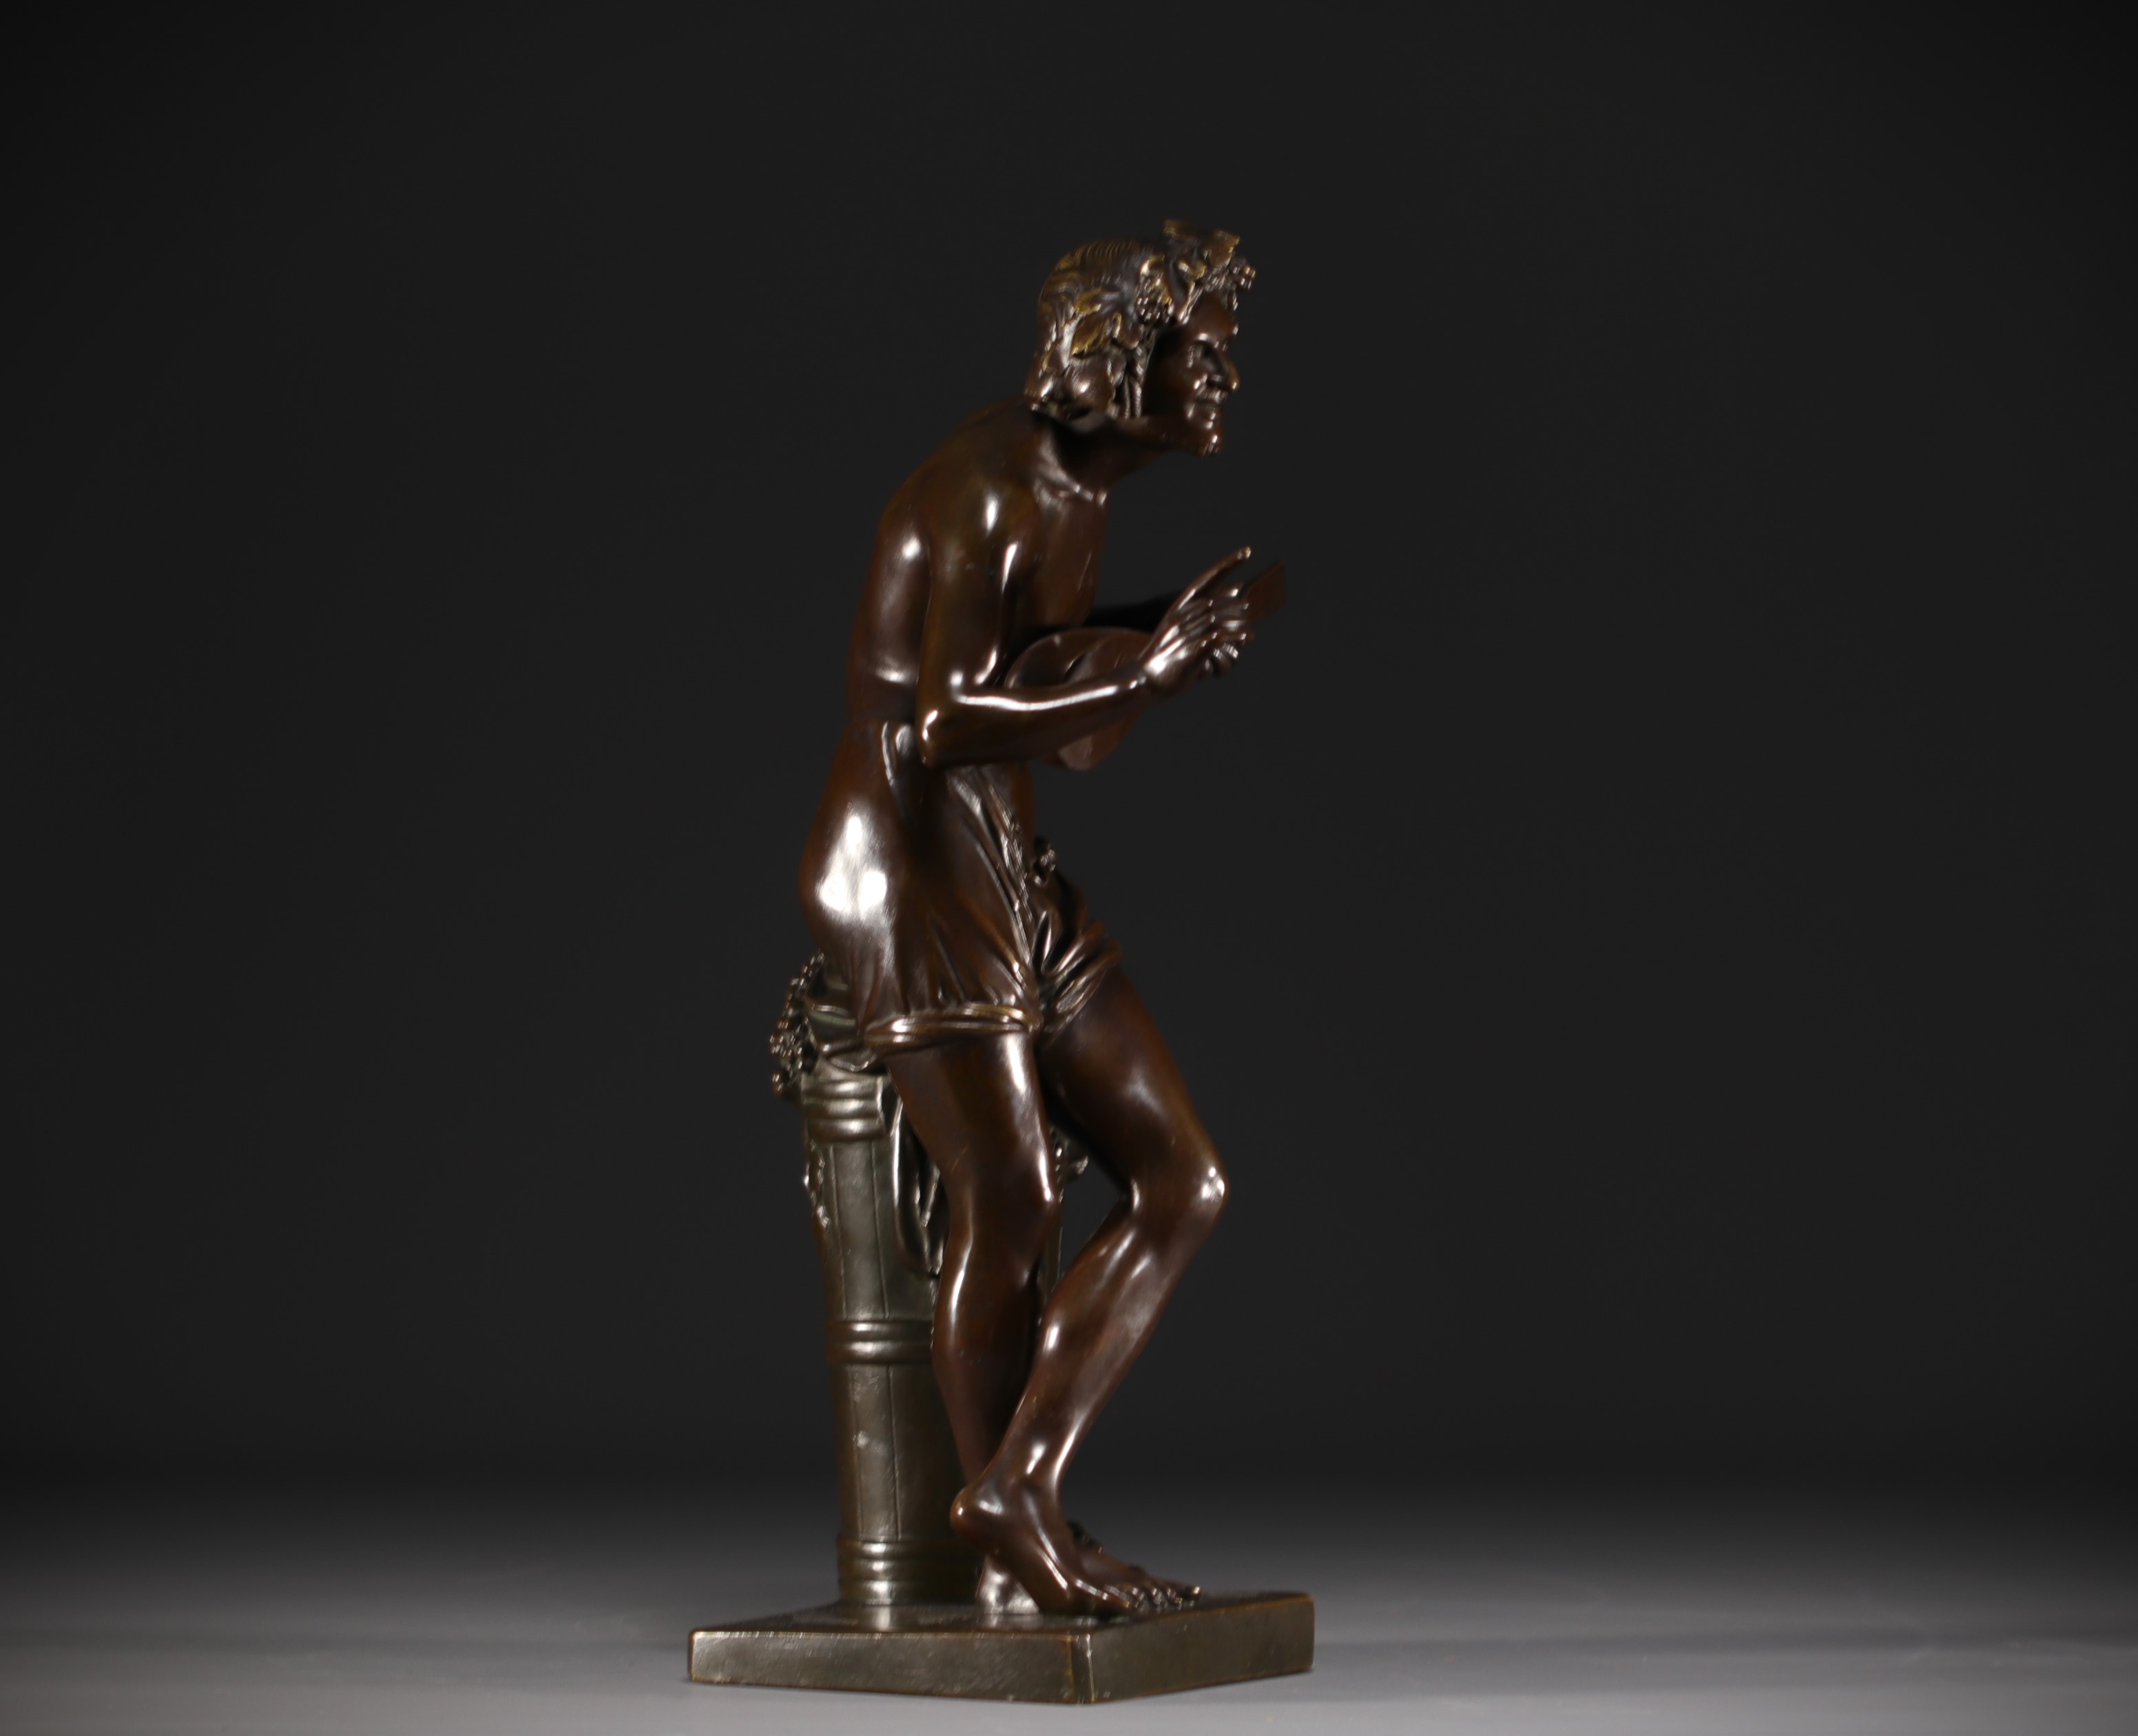 Francisque Joseph DURET (1804-1865) after - "L'Improvisateur" Sculpture in bronze with brown patina. - Image 5 of 5